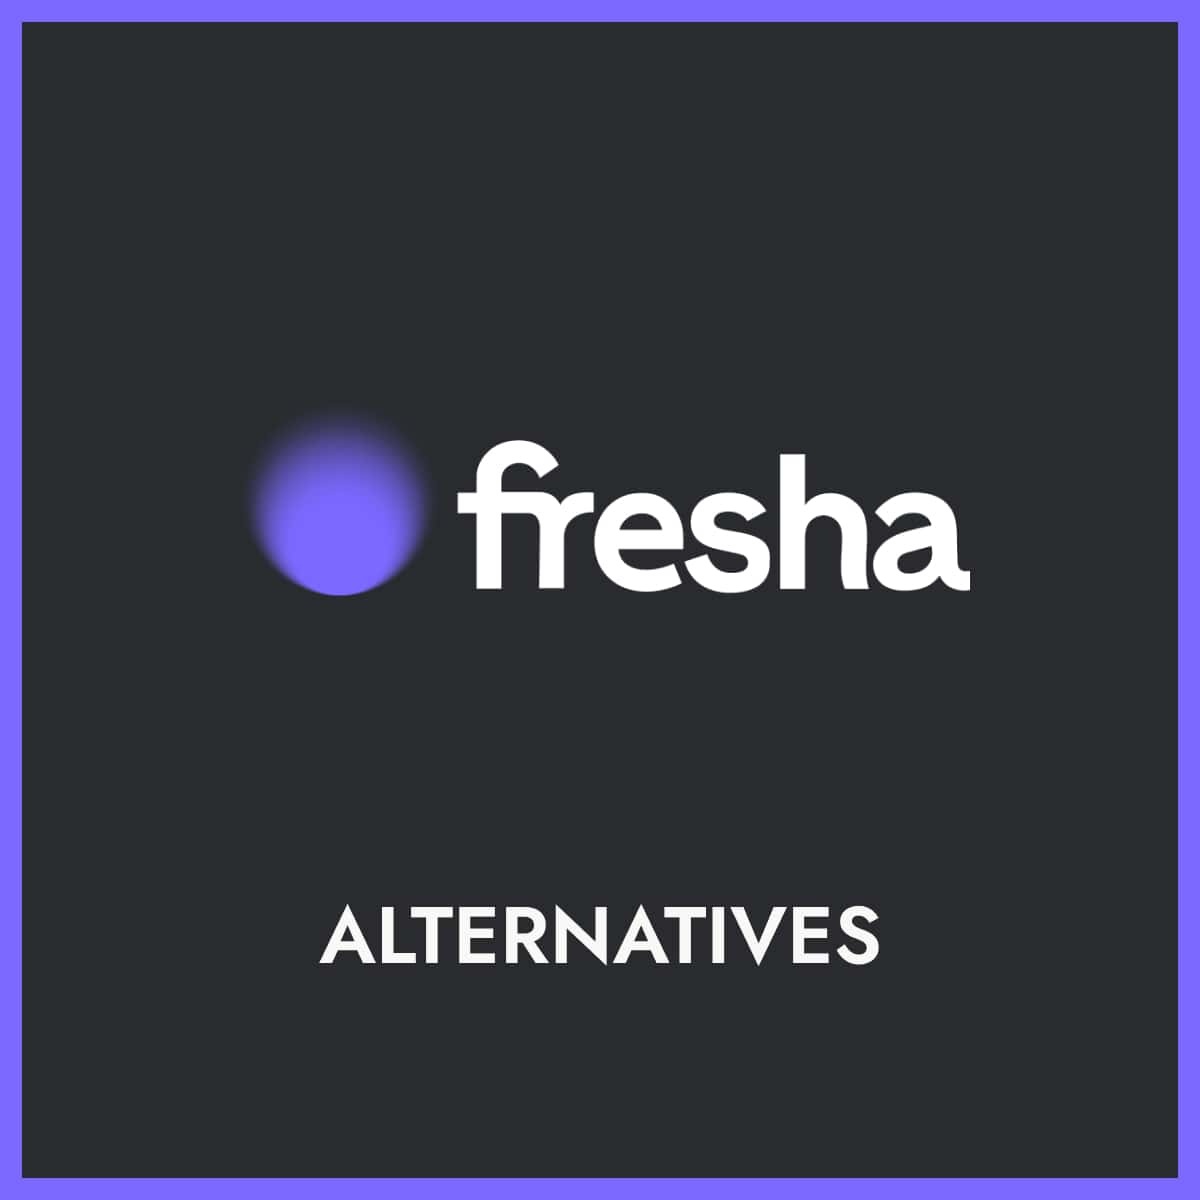 Fresha logo above the word "Alternatives"